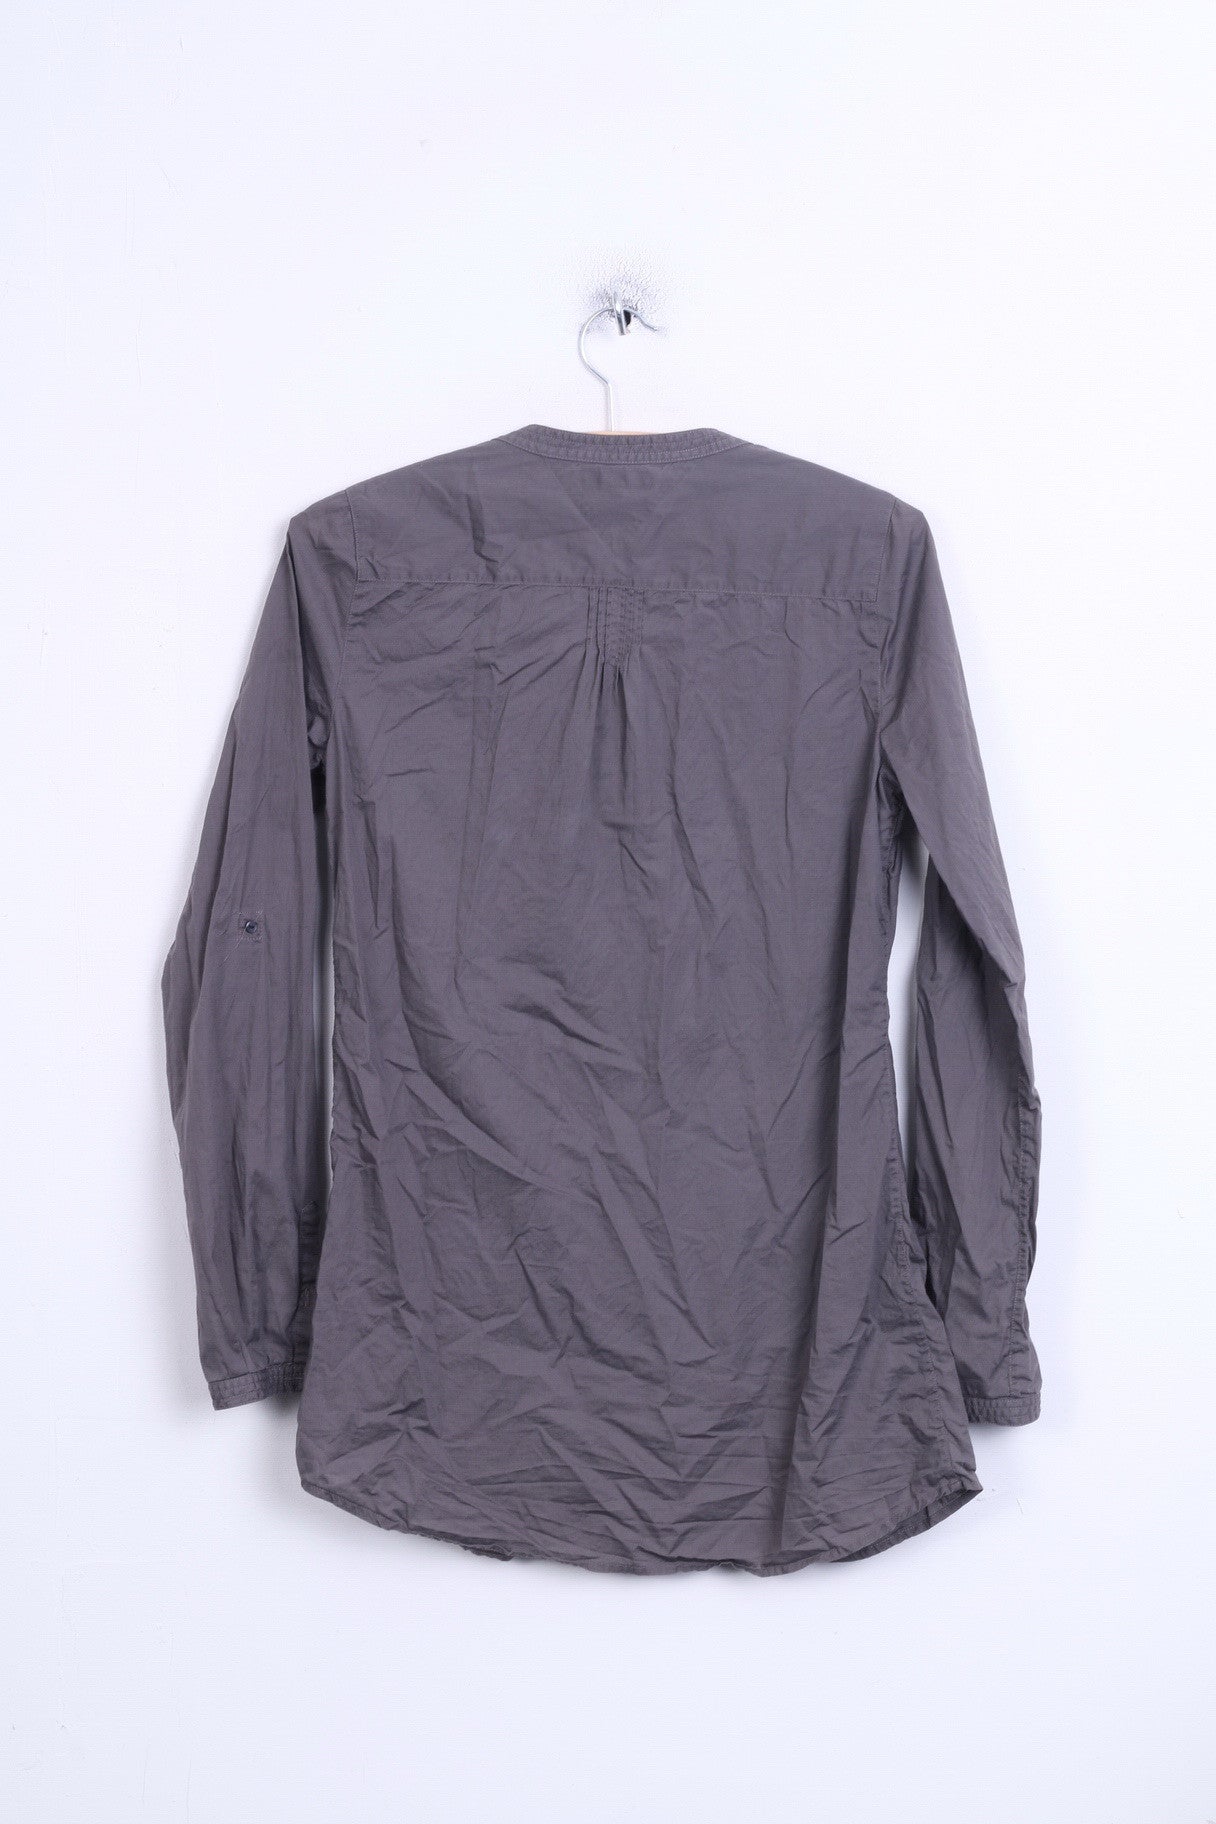 Tommy Hilfiger Womens 4 M Casual Shirt Grey V Neck Blouse - RetrospectClothes